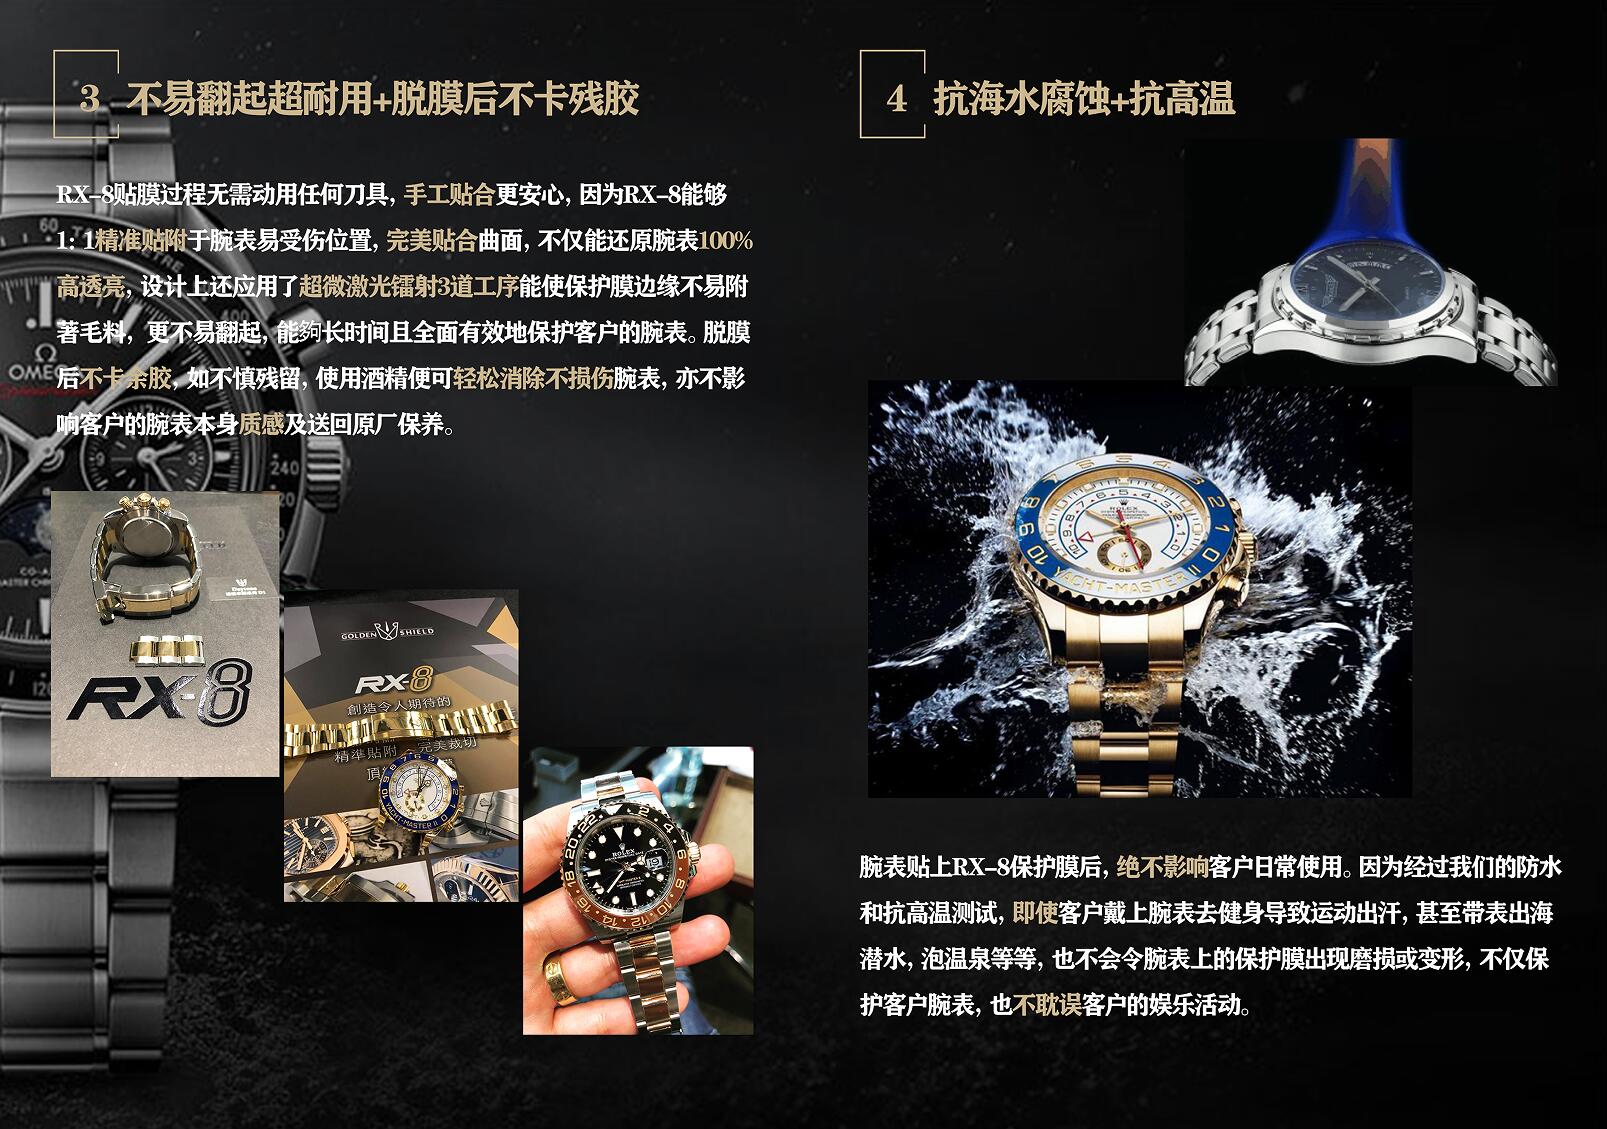 RX-8手表贴膜适用于爱彼皇家橡树26331st保护膜 外表圈表盘表扣